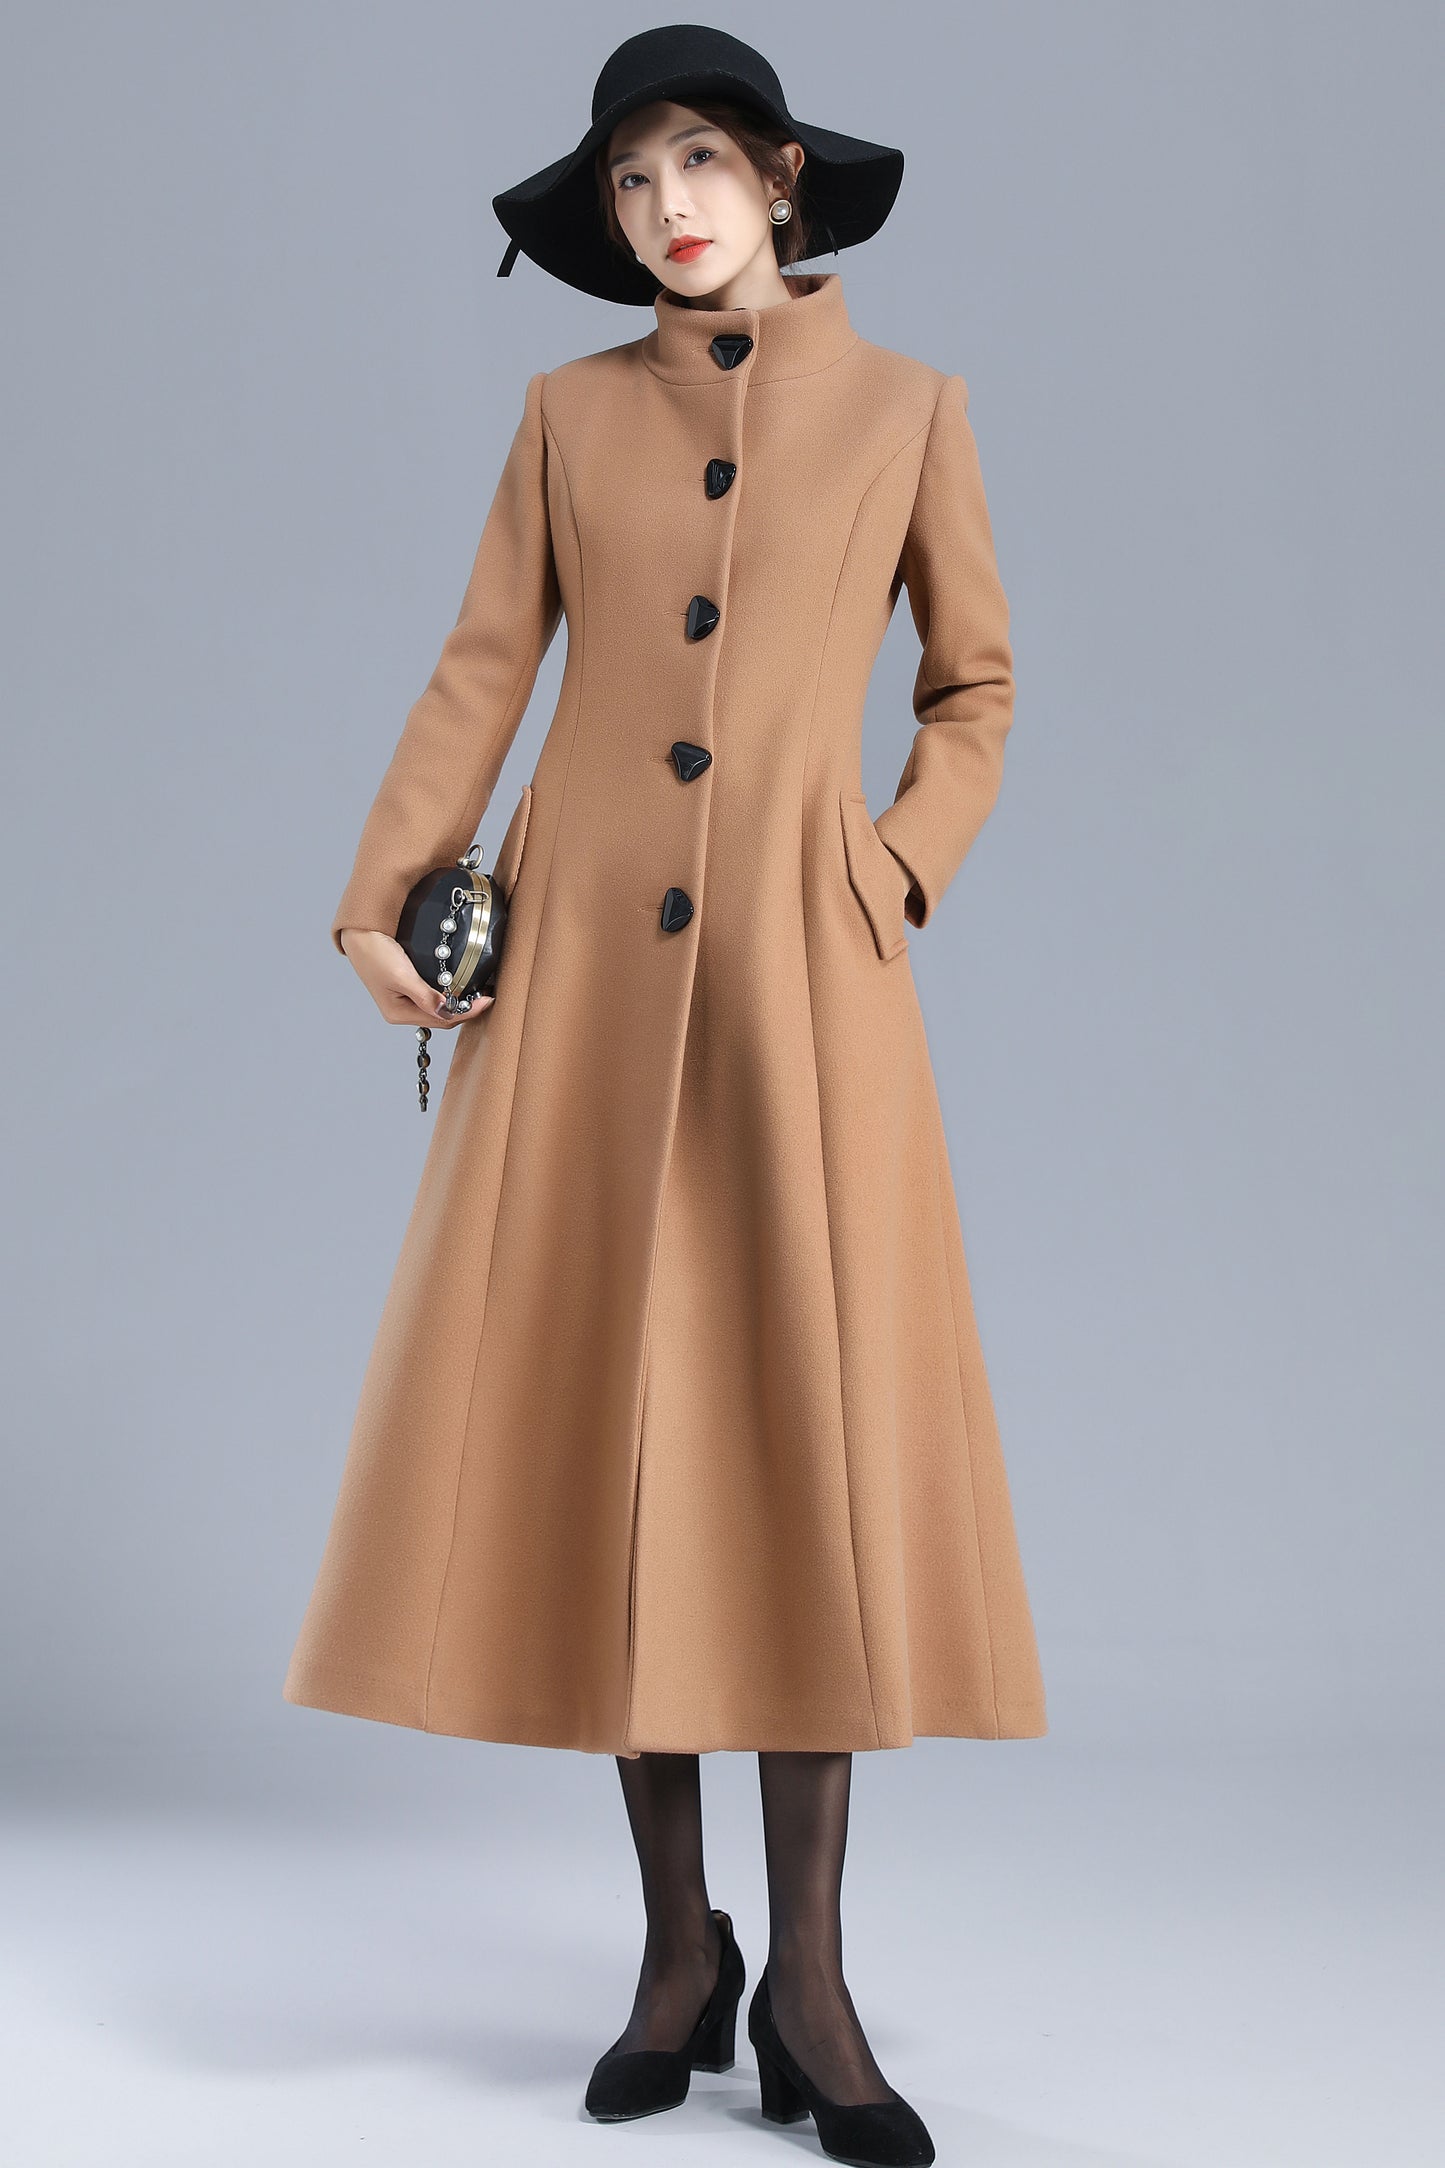 Vintage Inspired Single Breasted Winter Wool Coat 3201